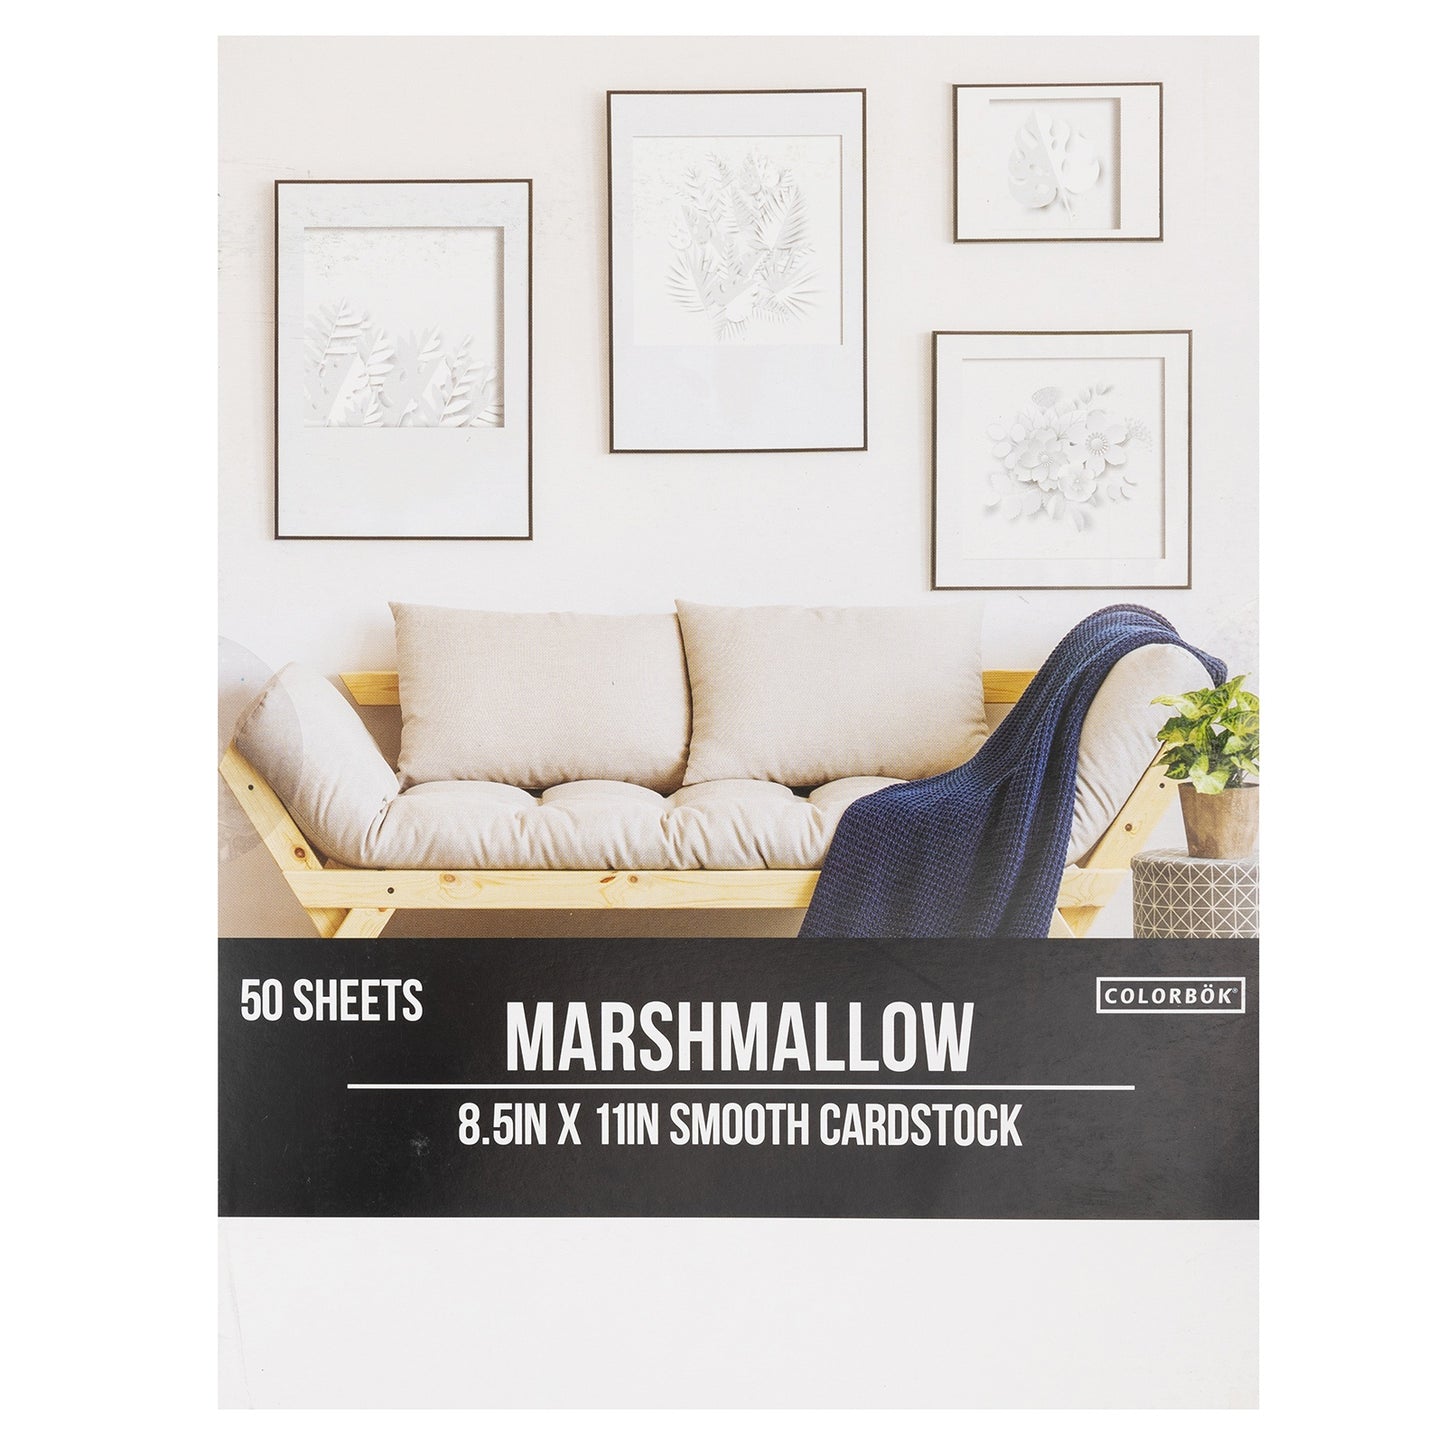 Colorbok 78lb Smooth Cardstock 8.5"X11" 50/Pkg-Marshmallow